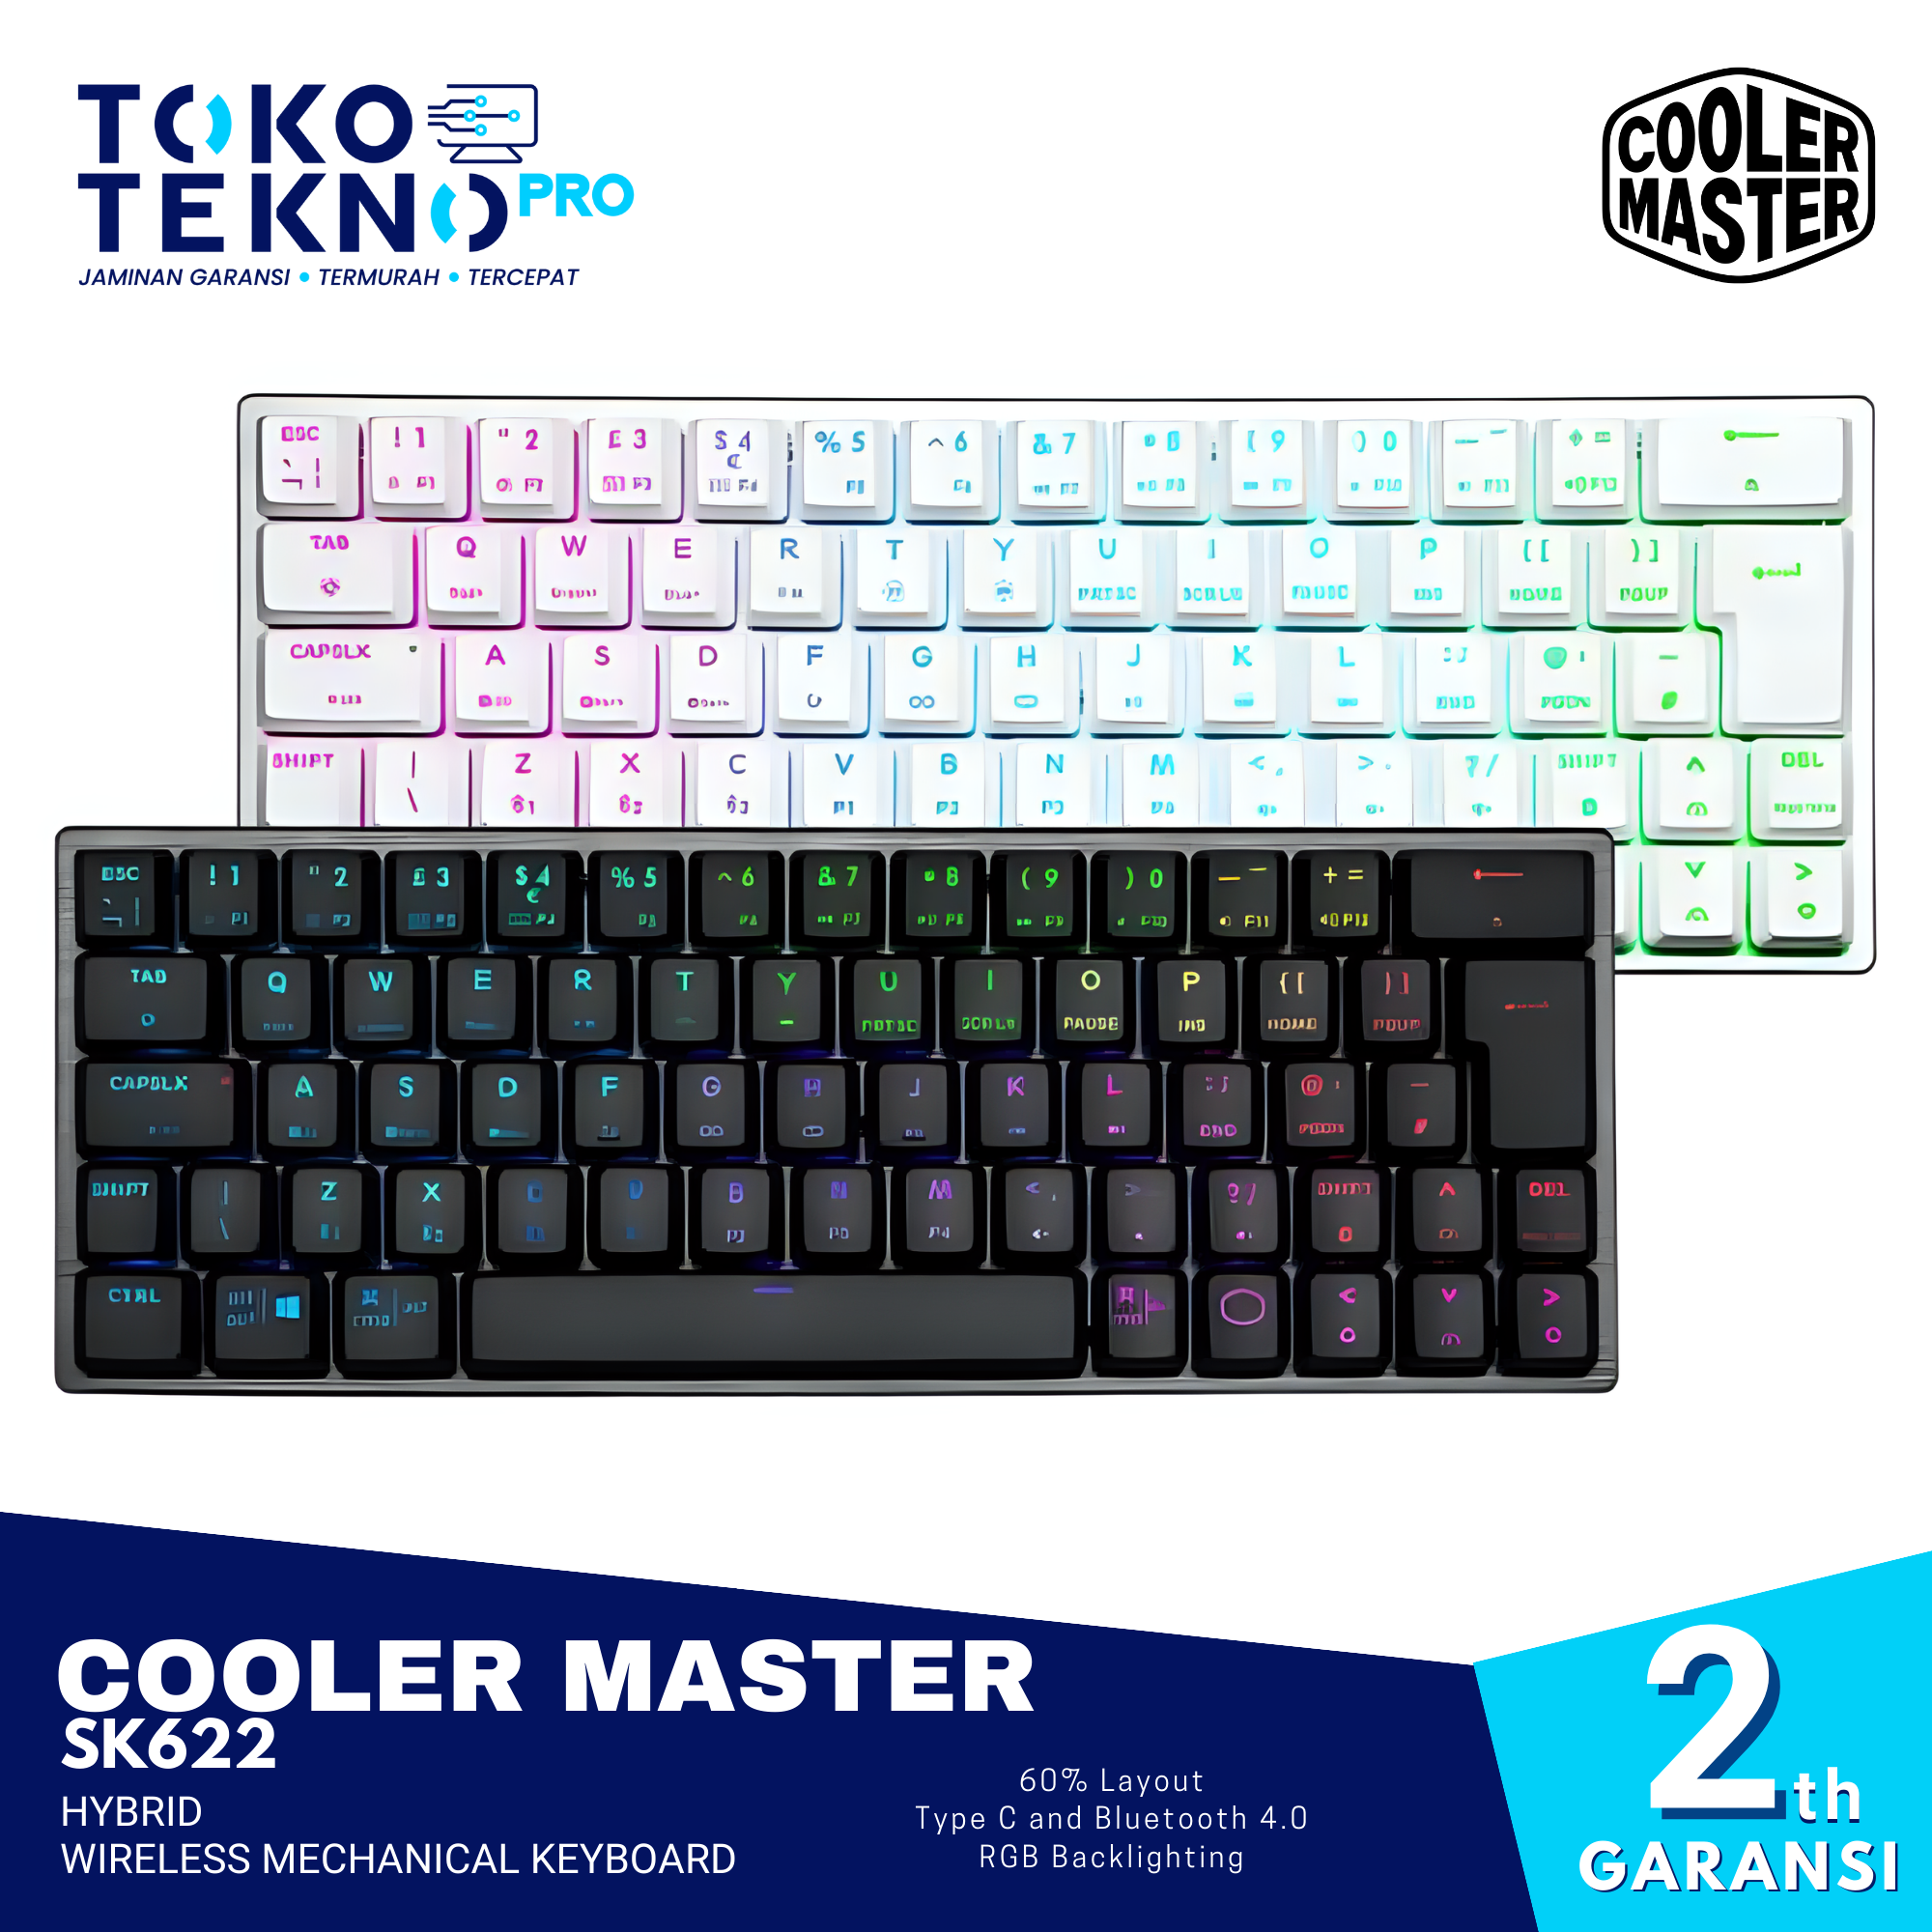 Cooler Master SK622 Hybrid Wireless Mechanical Keyboard